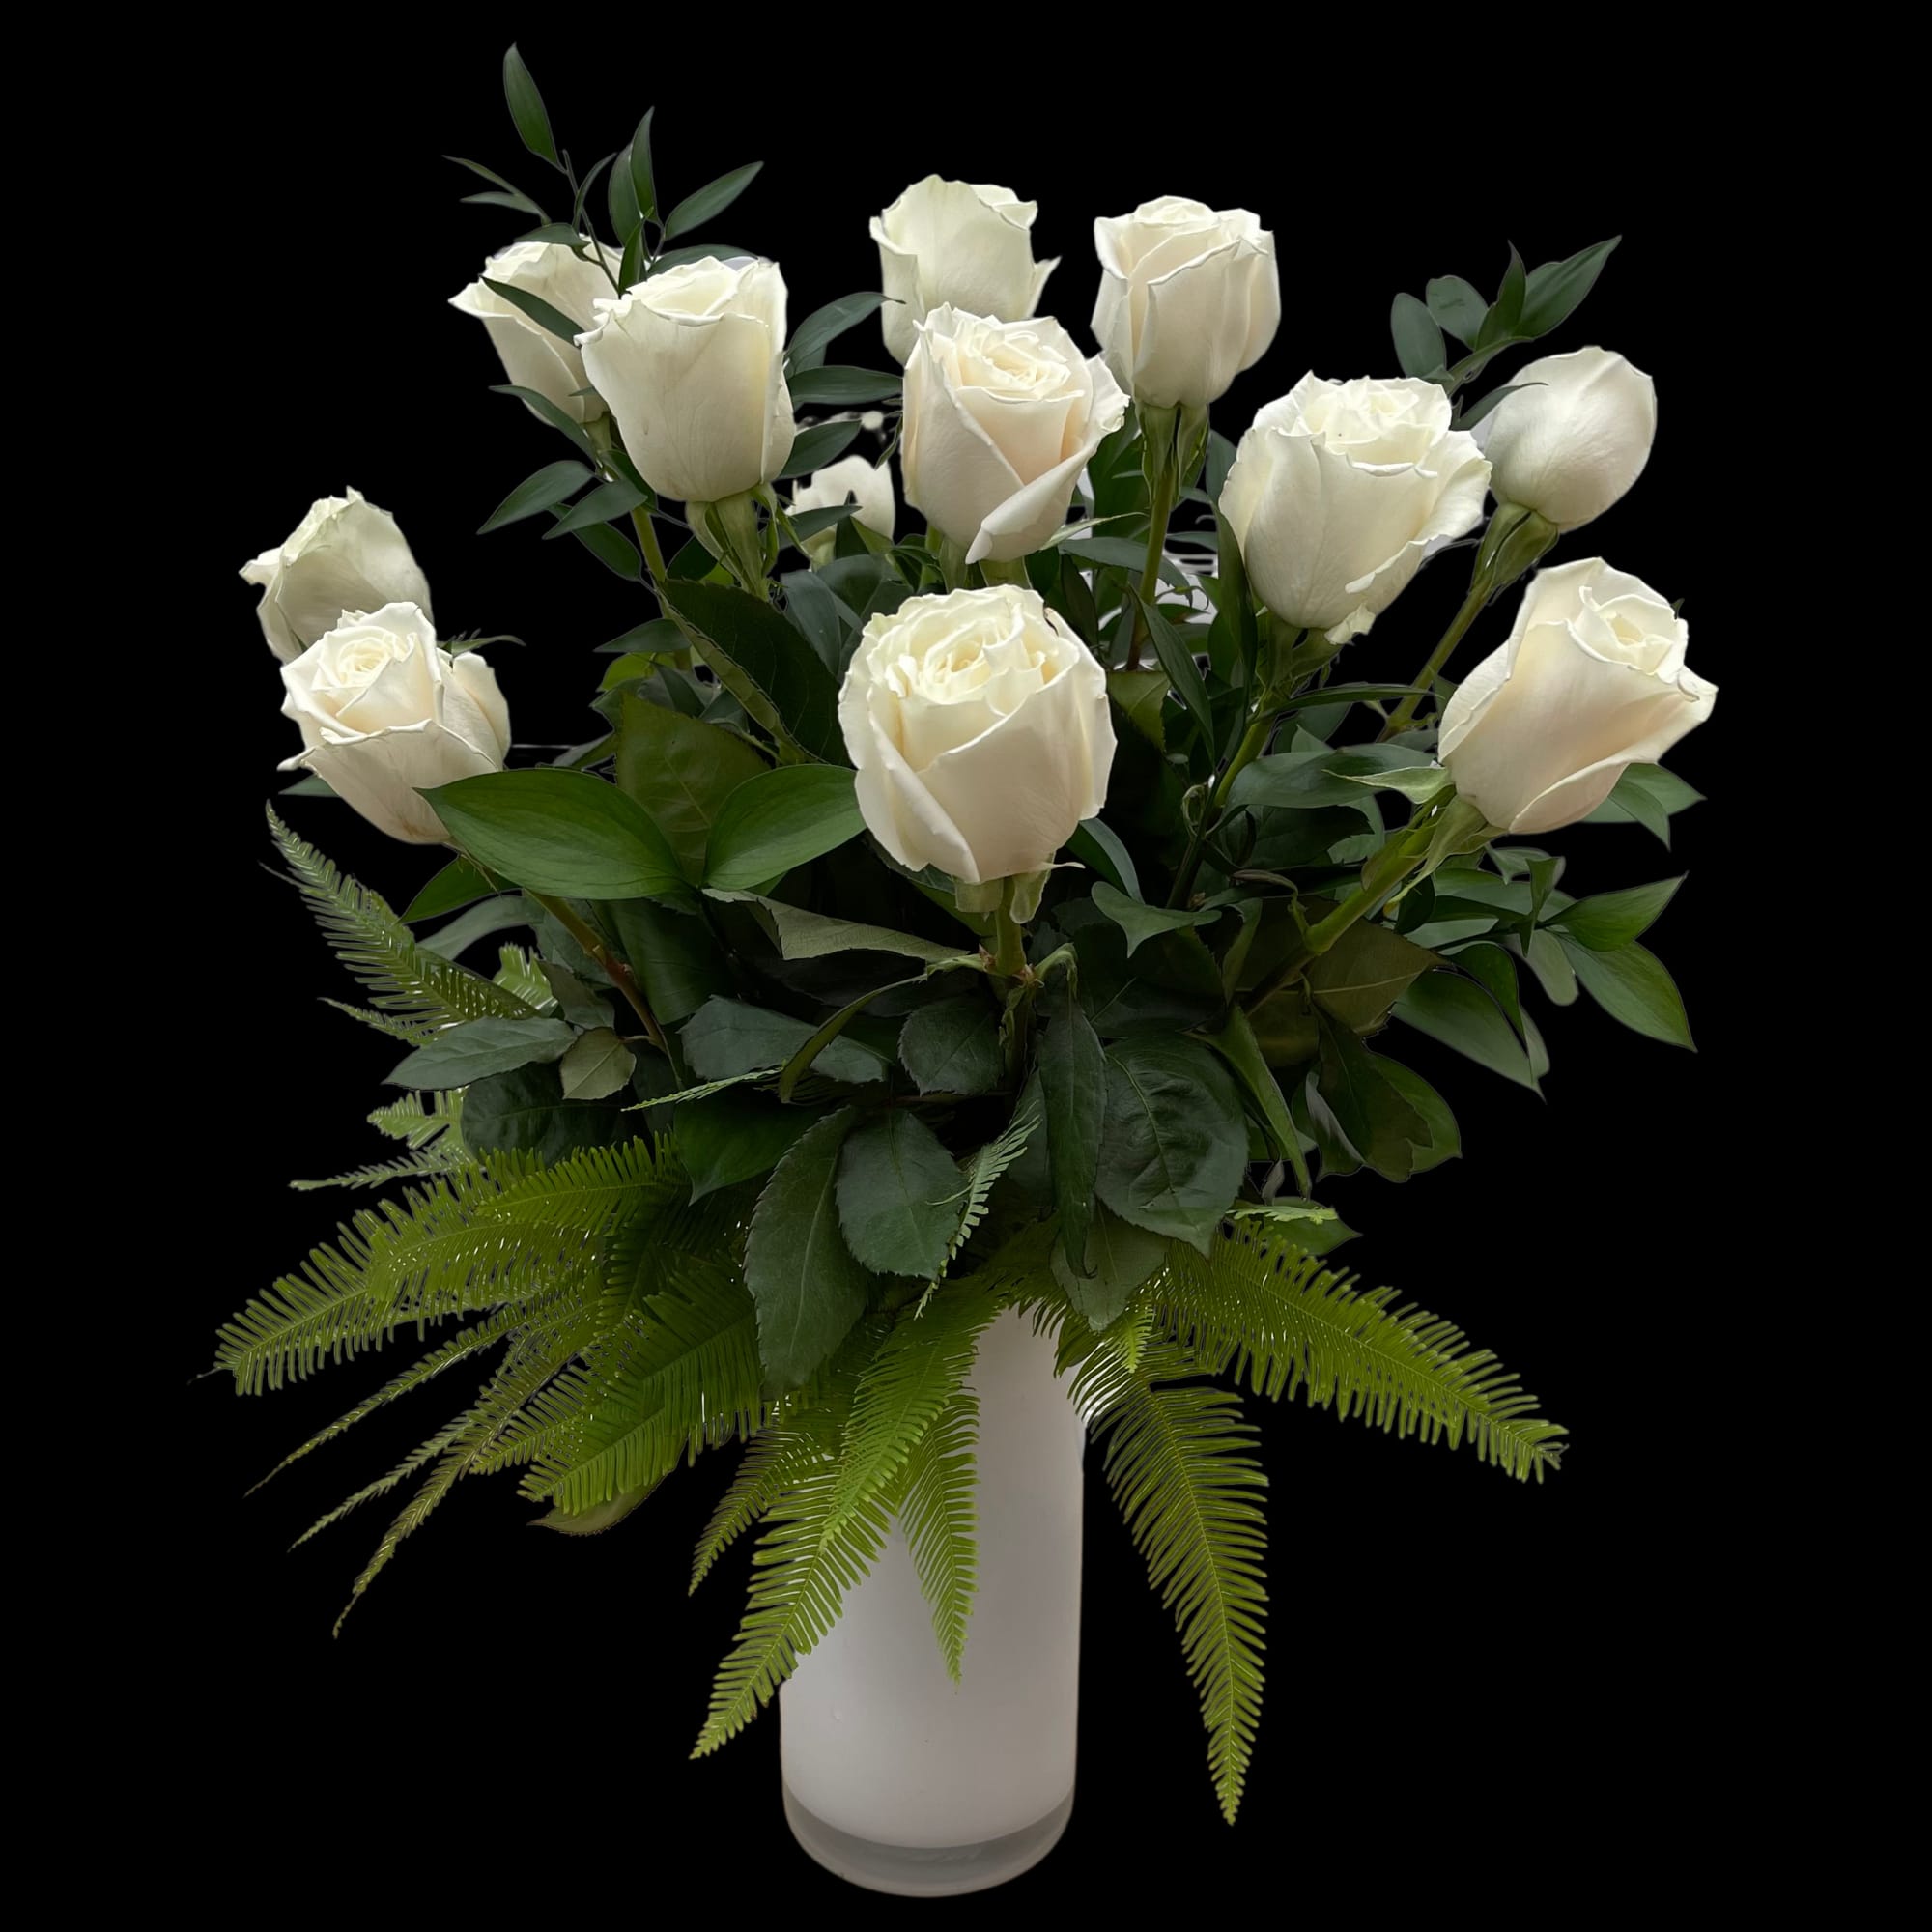 Modern White Roses - Long Stem Roses, arranged in a white vase accented with luxury foliage  (NO babies breath)  Standard: One Dozen Deluxe: Two Dozen  Premium: Three Dozen 